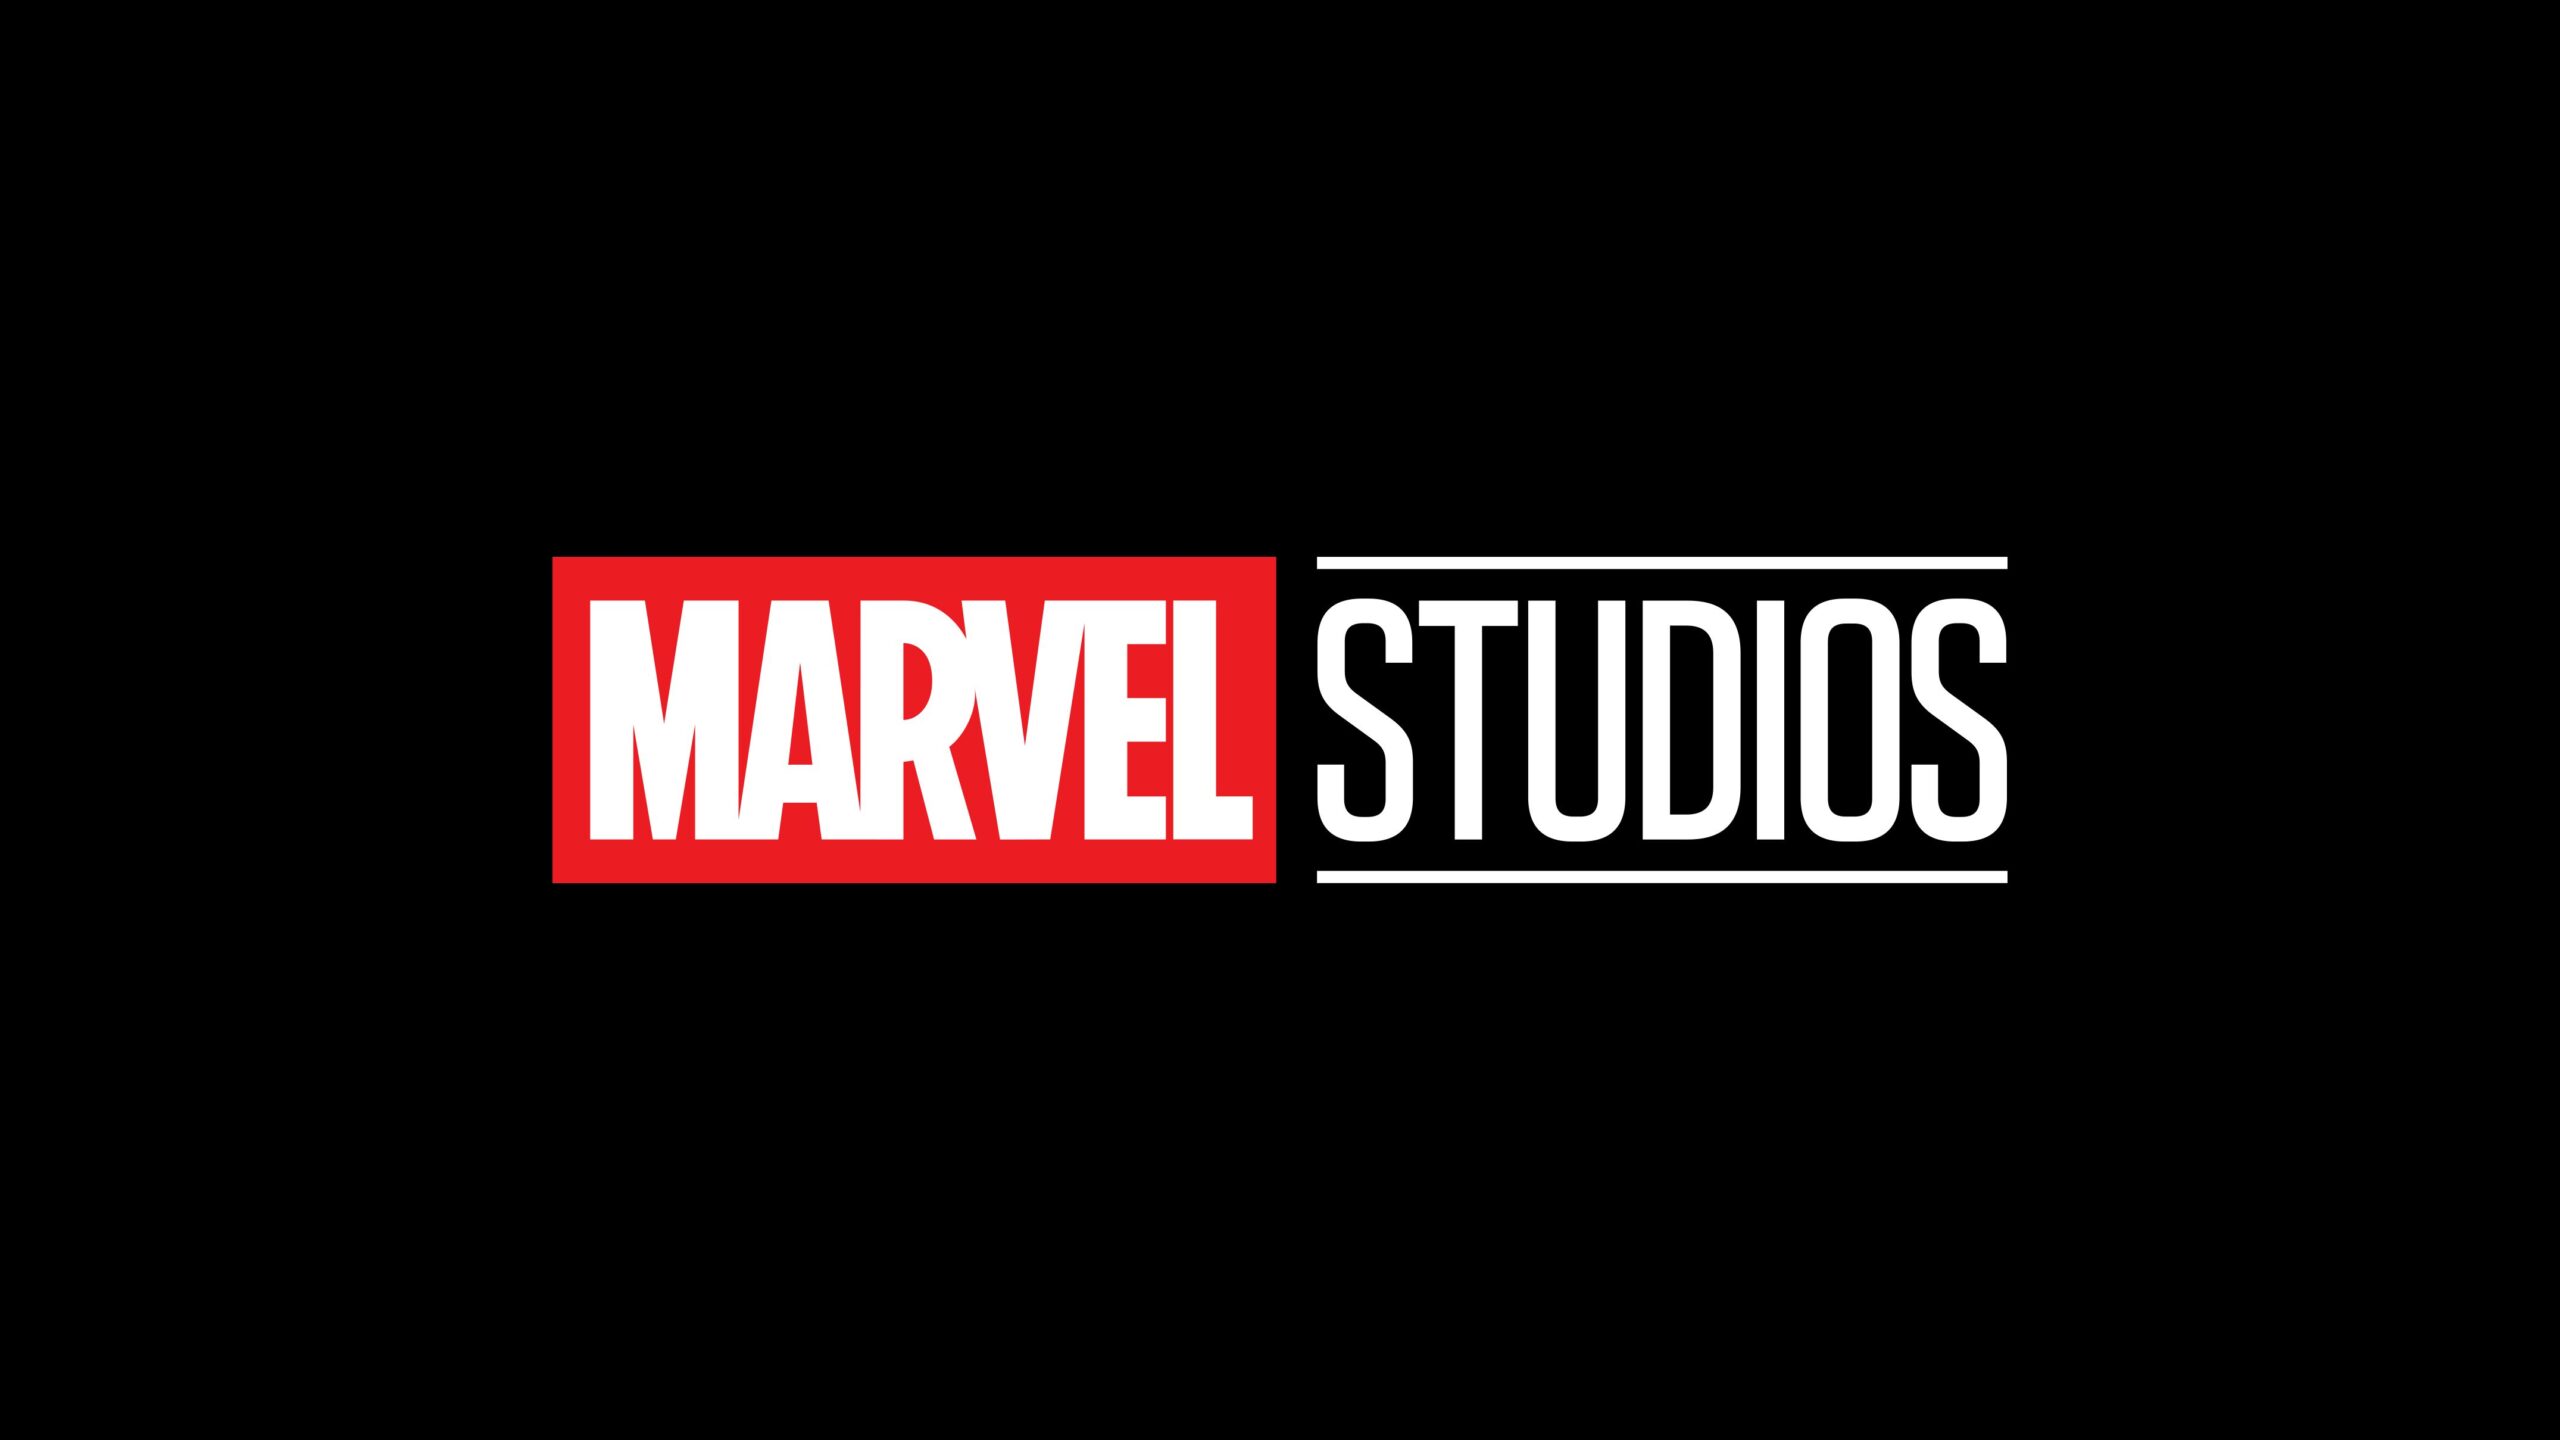 How successful is Marvel Studios?